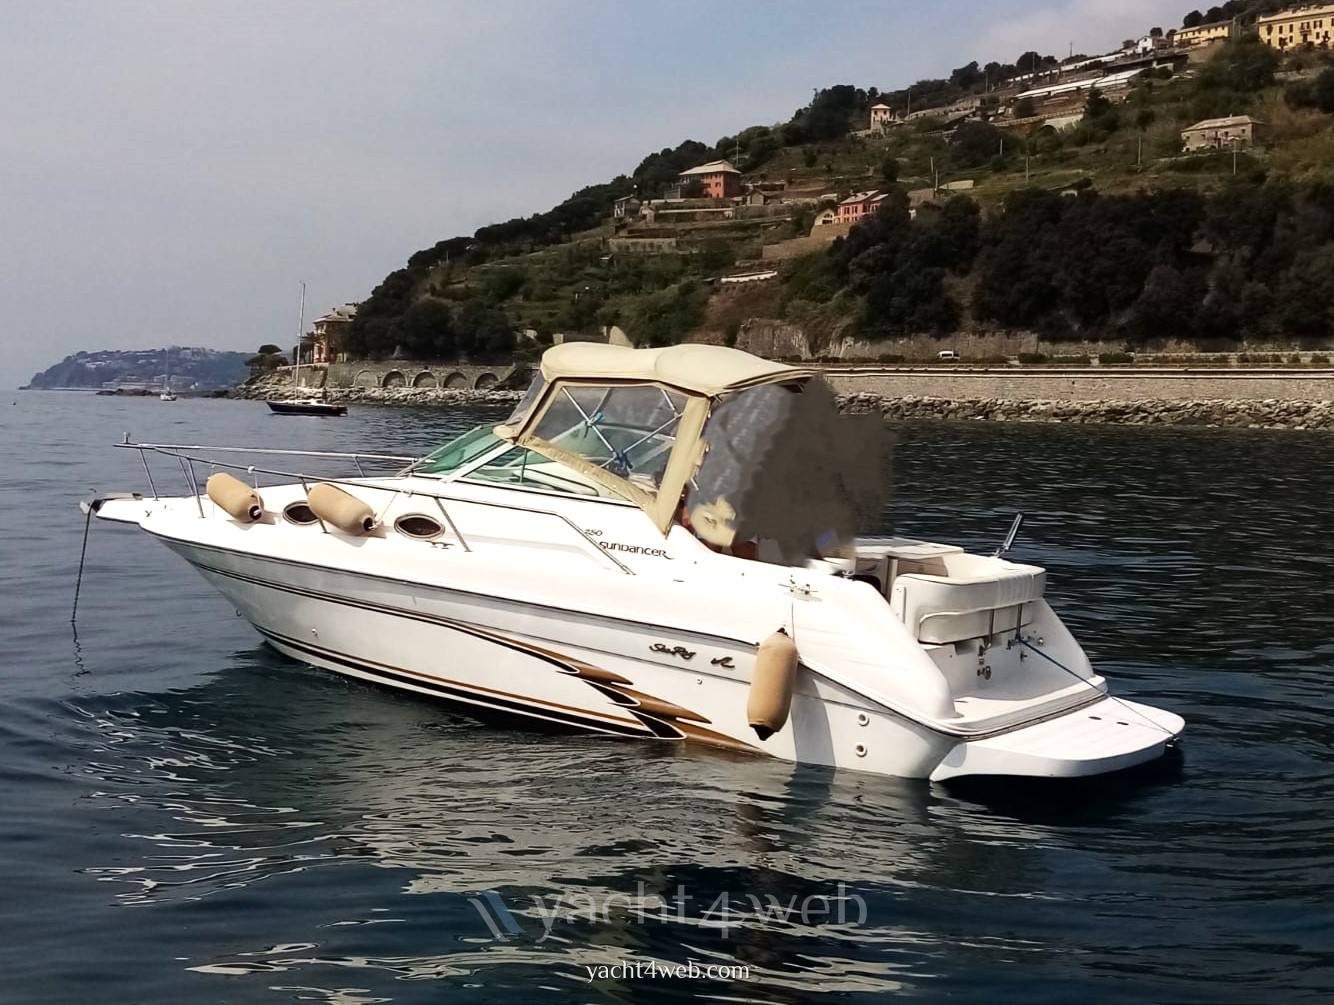 SEA RAY 250 sundancer Motor boat used for sale